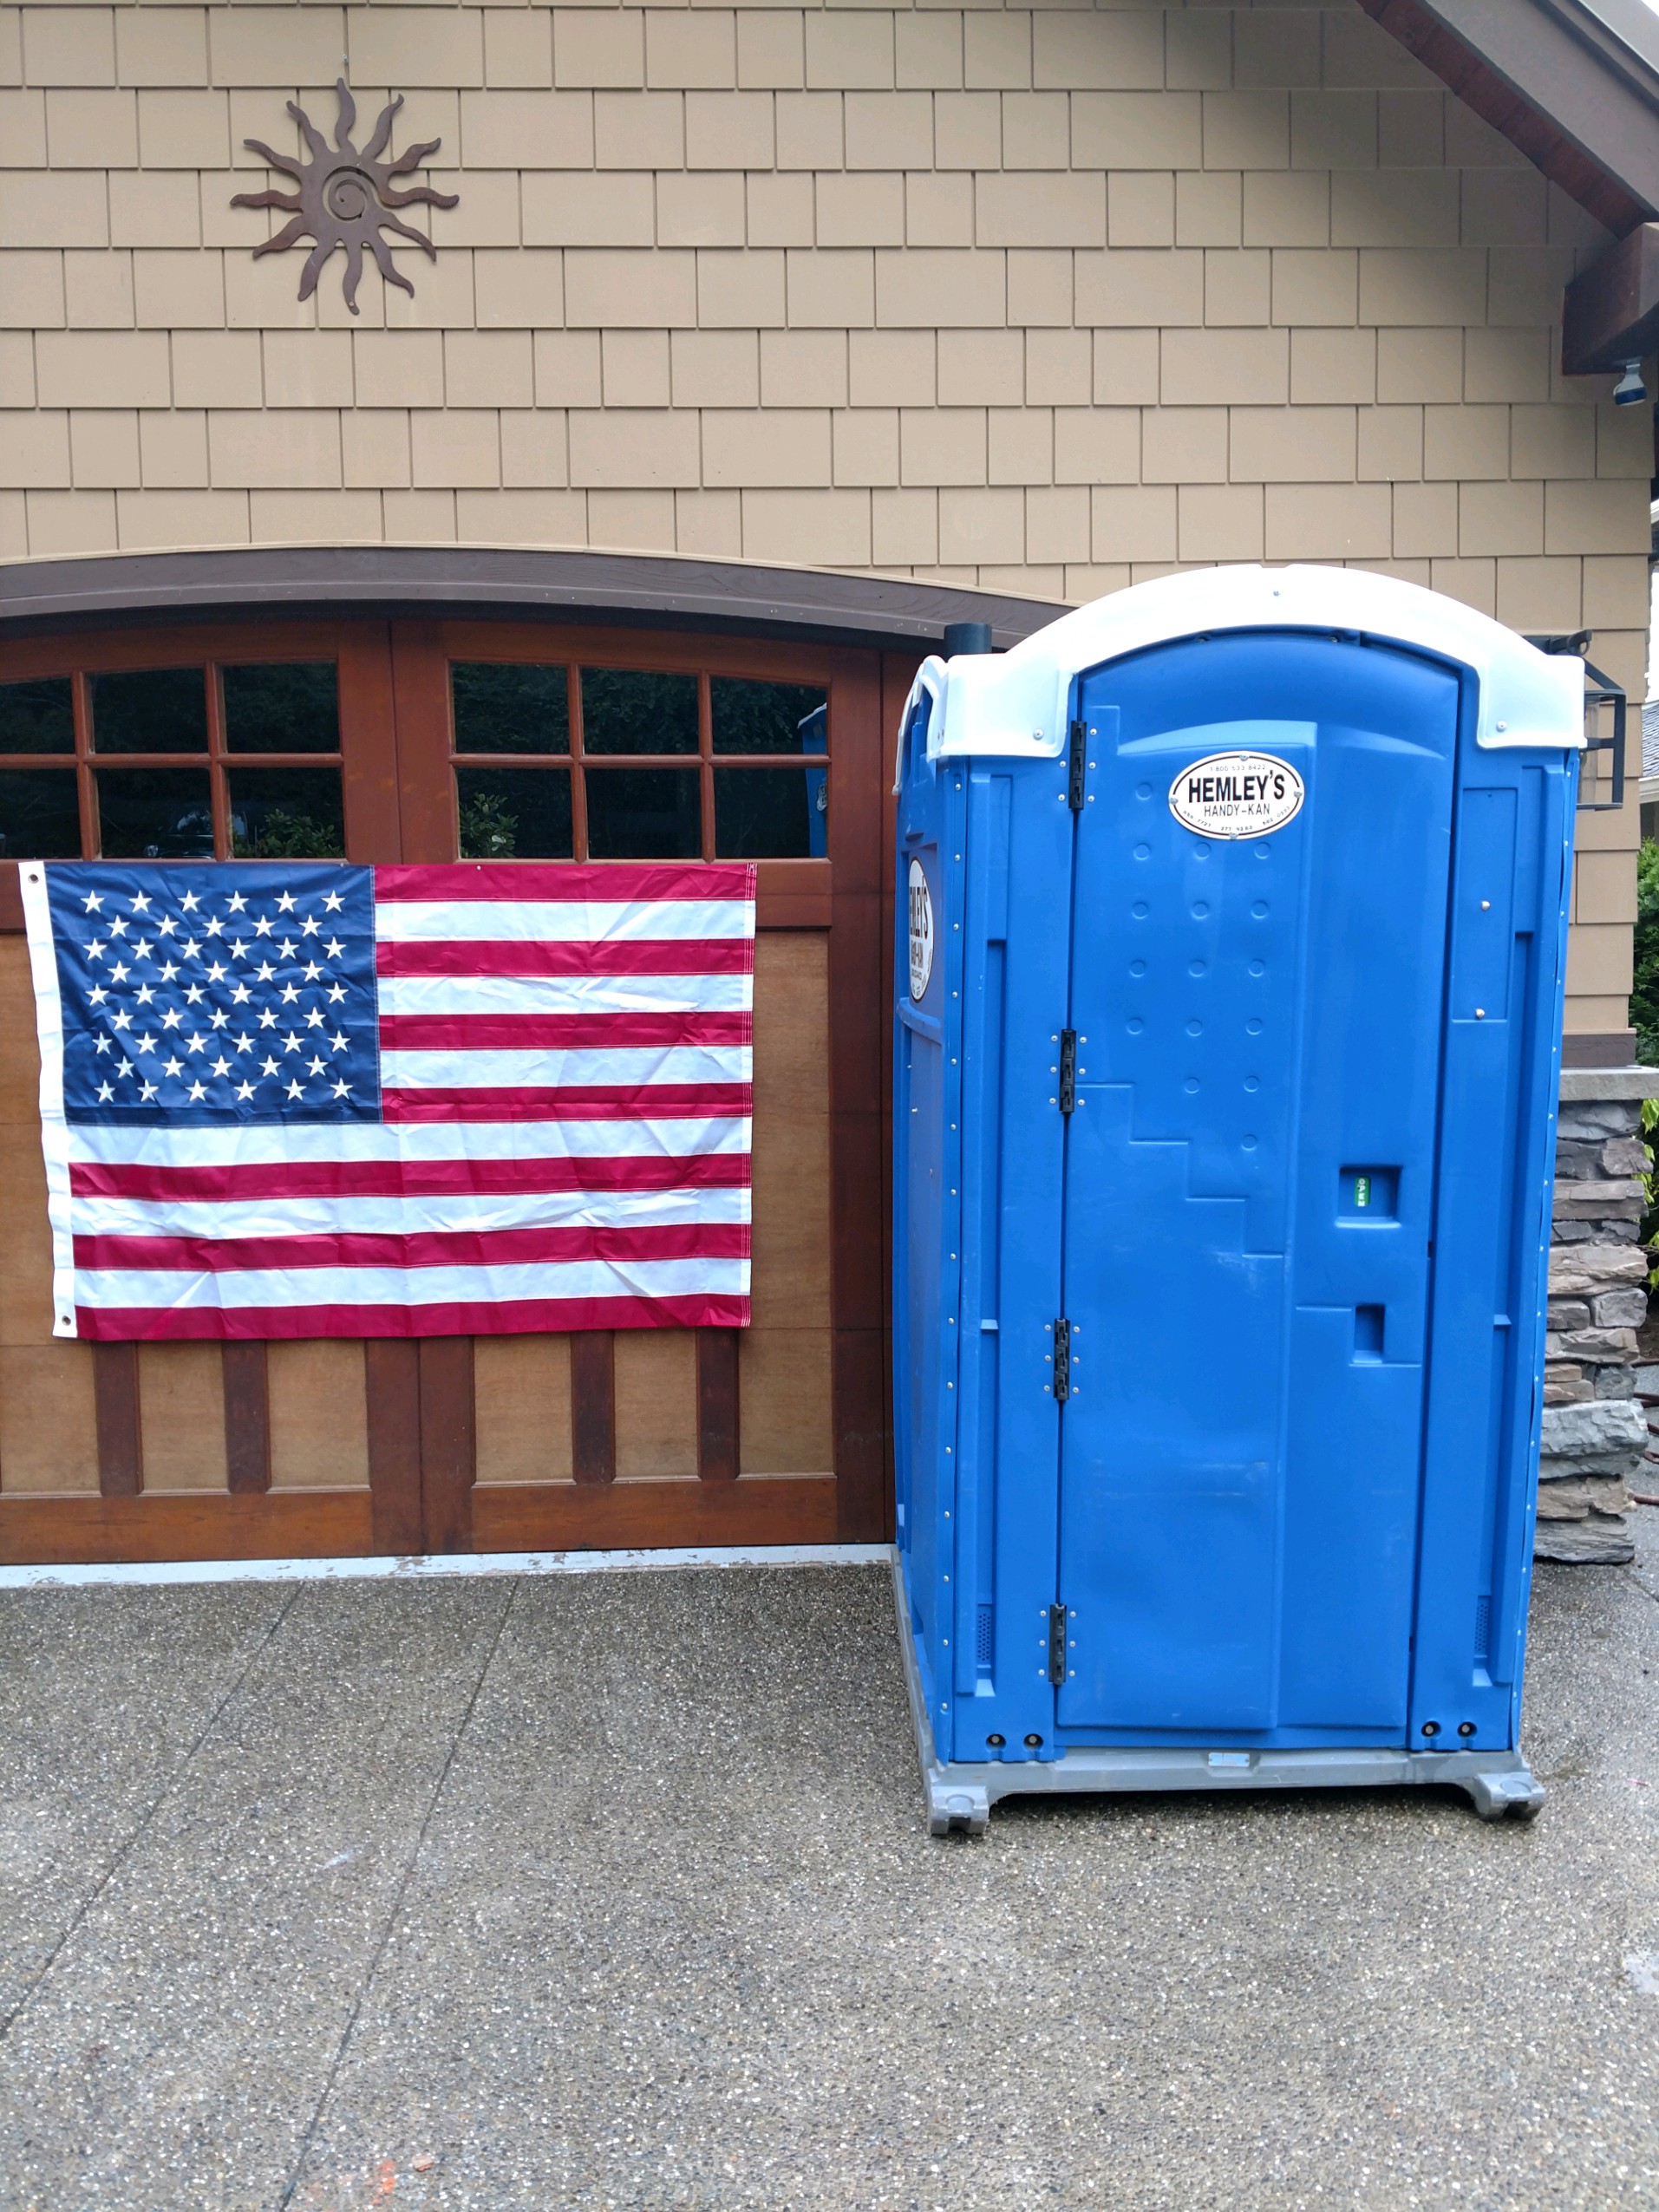 Hemleys Handy Kans - Portable Toilet Rentals For Job-sites, Events, Emergencies, in Gig Harbor, Bremerton, Port Orchard, Kitsap County WA, Pierce County WA, and King County WA